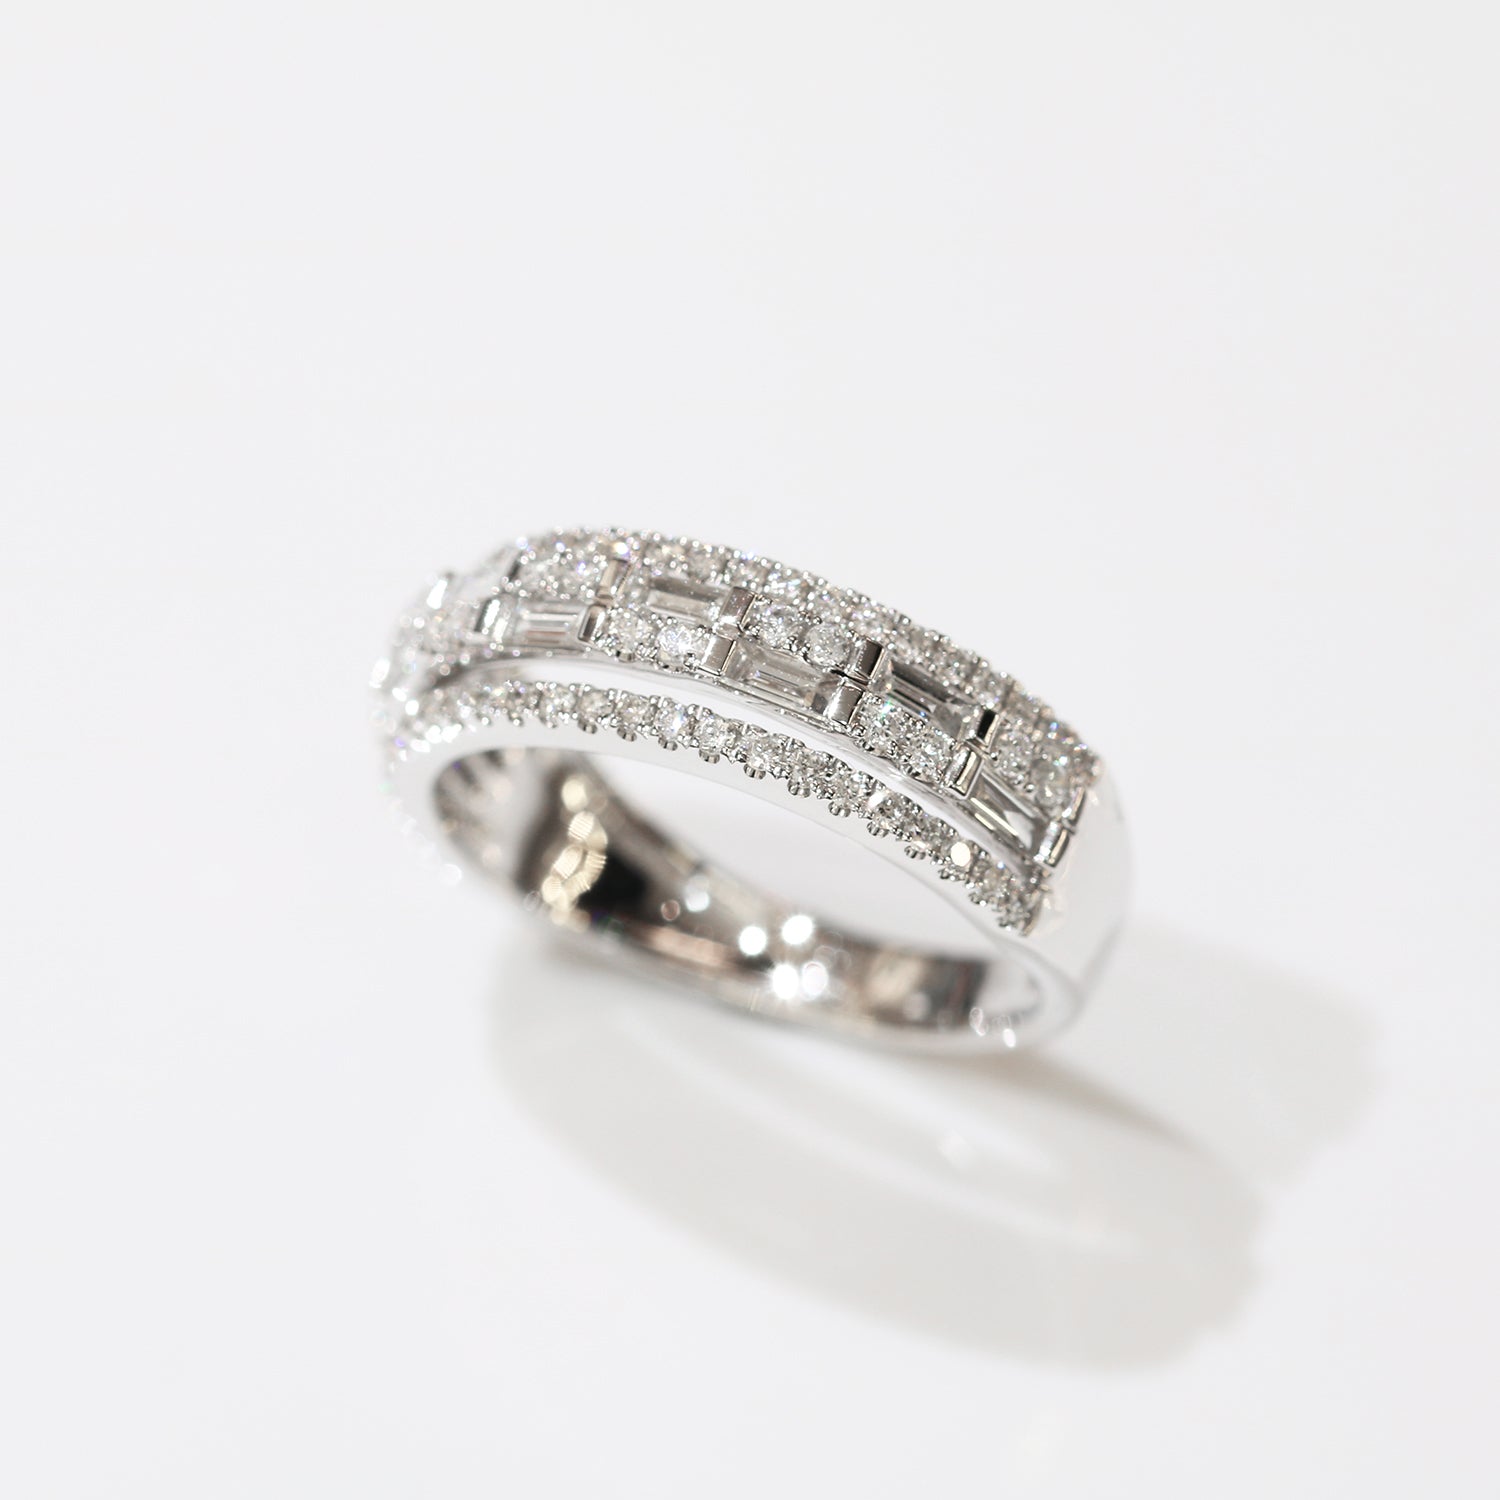 18k白金鑽石排戒側面  18k White Gold Four-Row Baguette Diamond Ring on side view